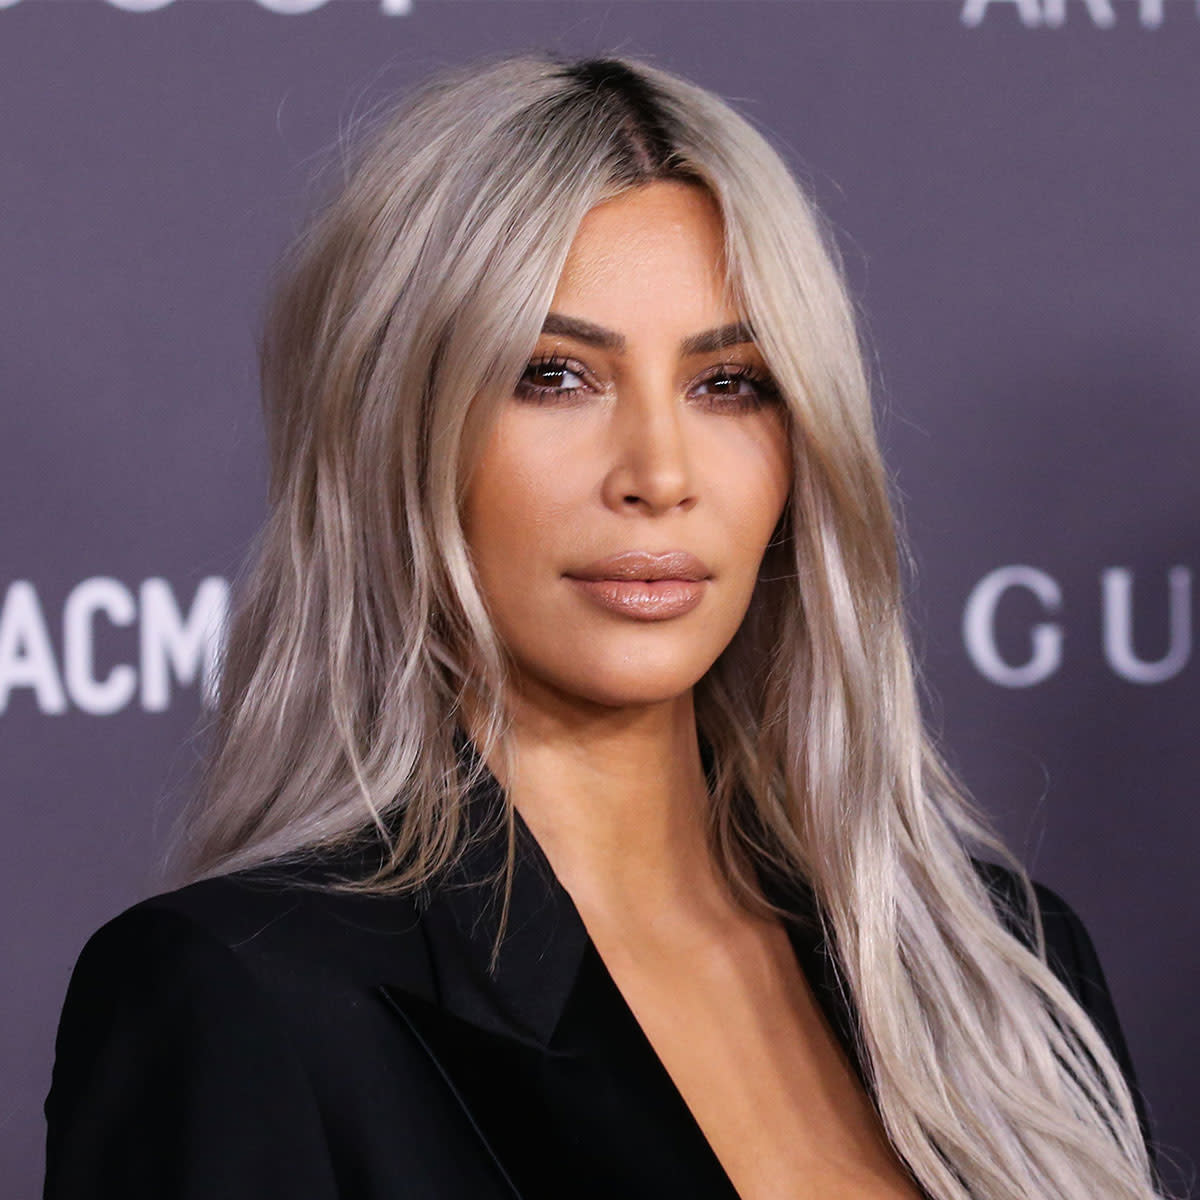 Kim Kardashian wearing Gucci arrives at The 2017 LACMA Gala